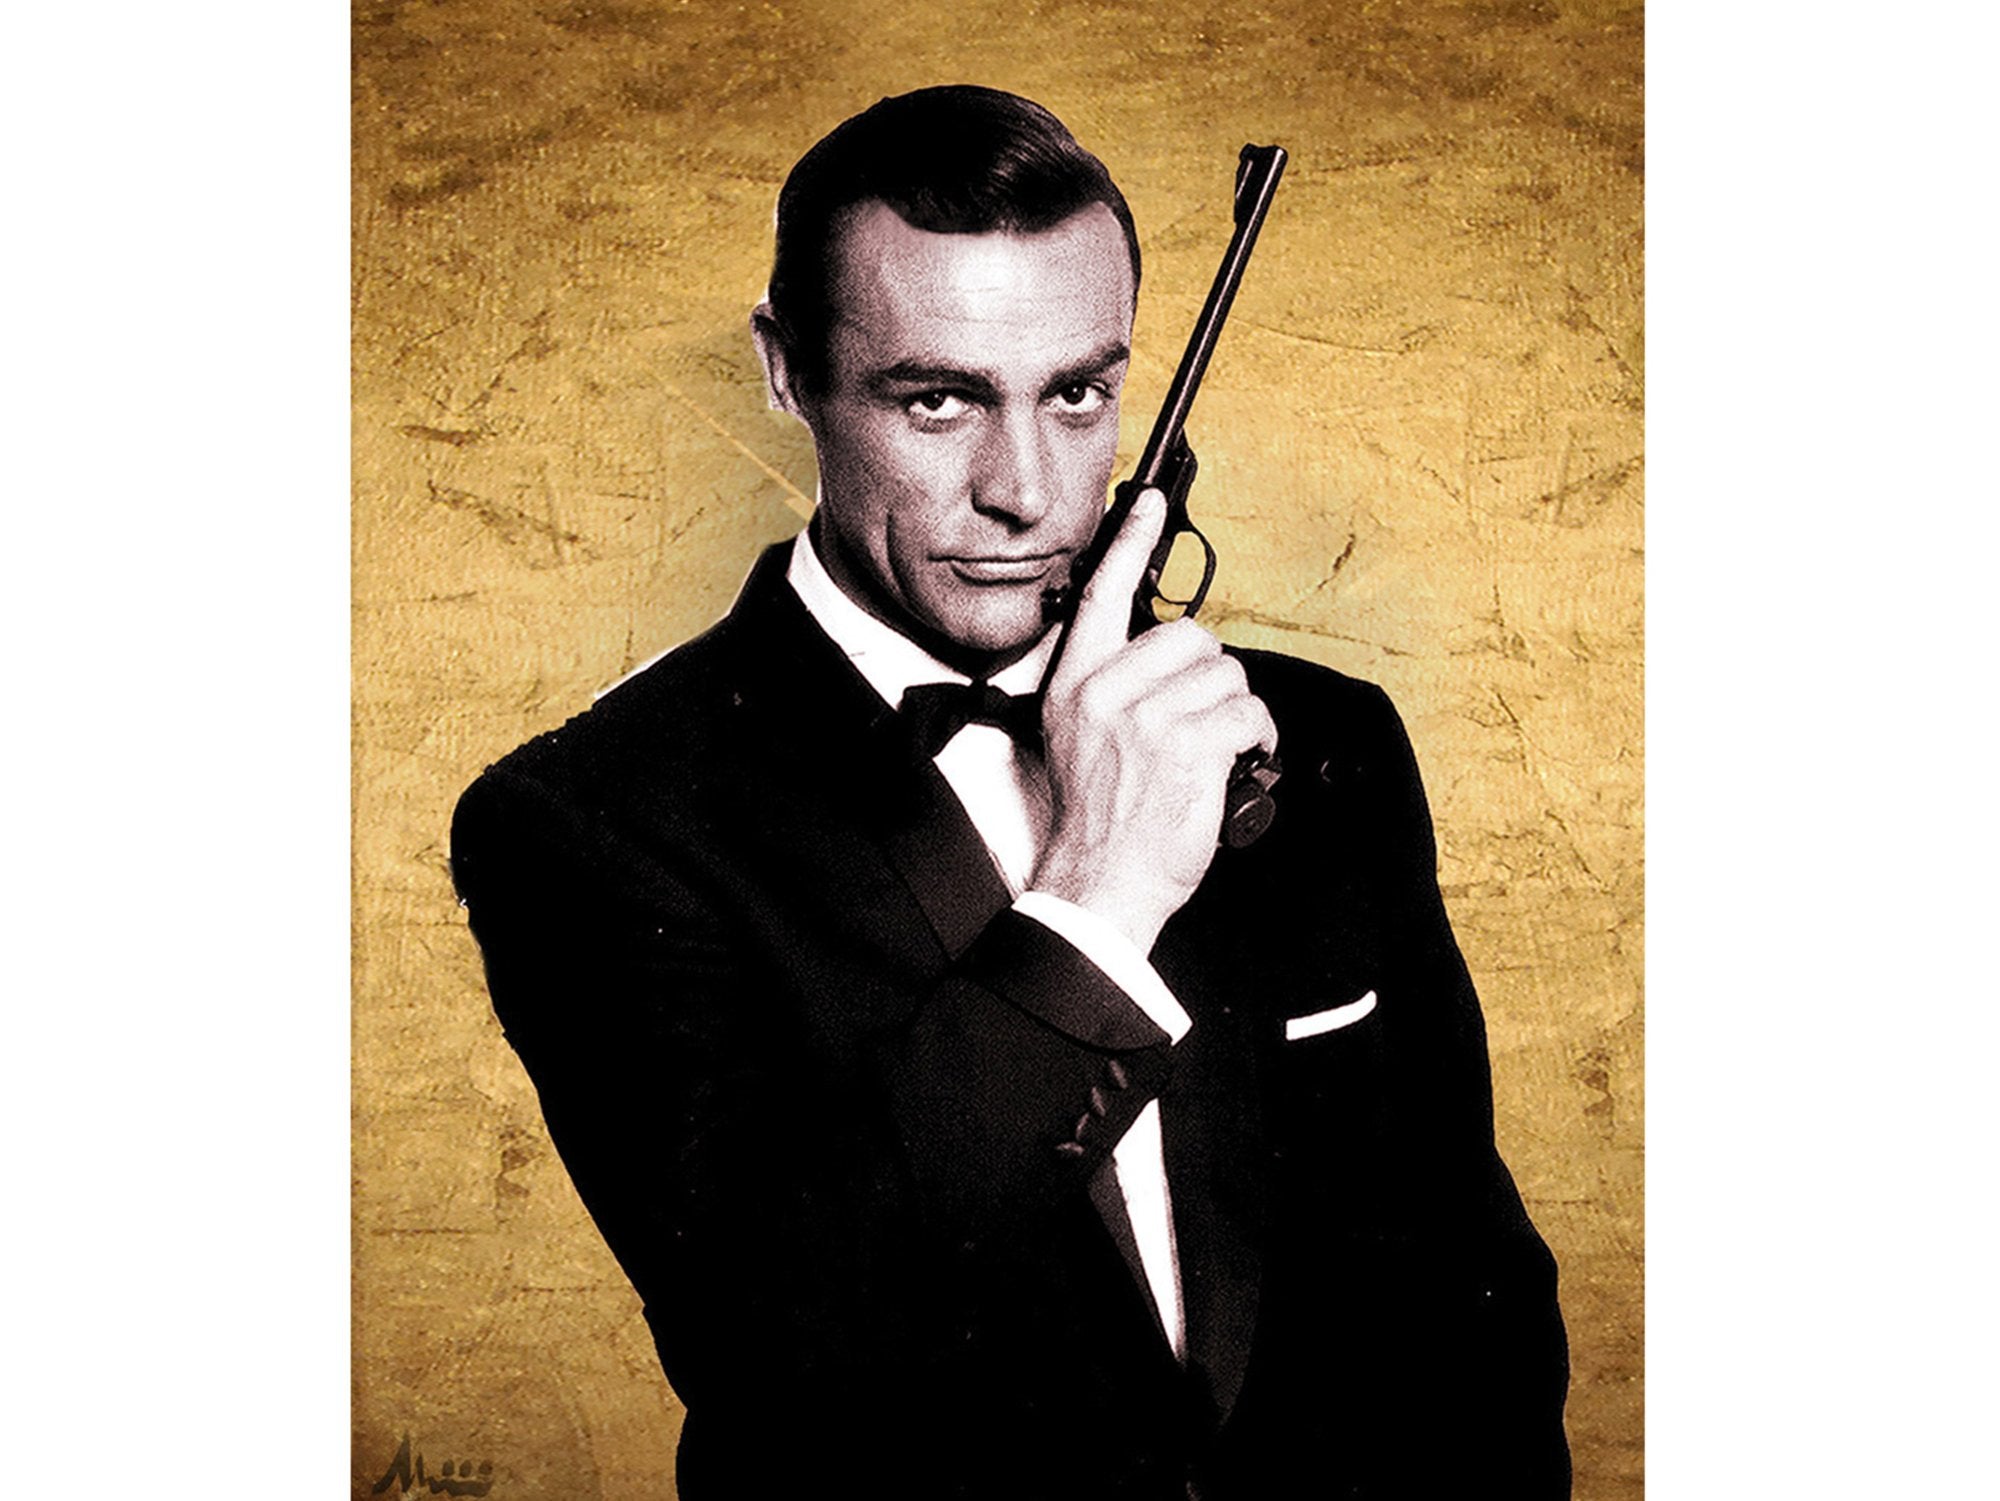 Bond.....James Bond! - Page 2 - RimfireCentral.com Forums